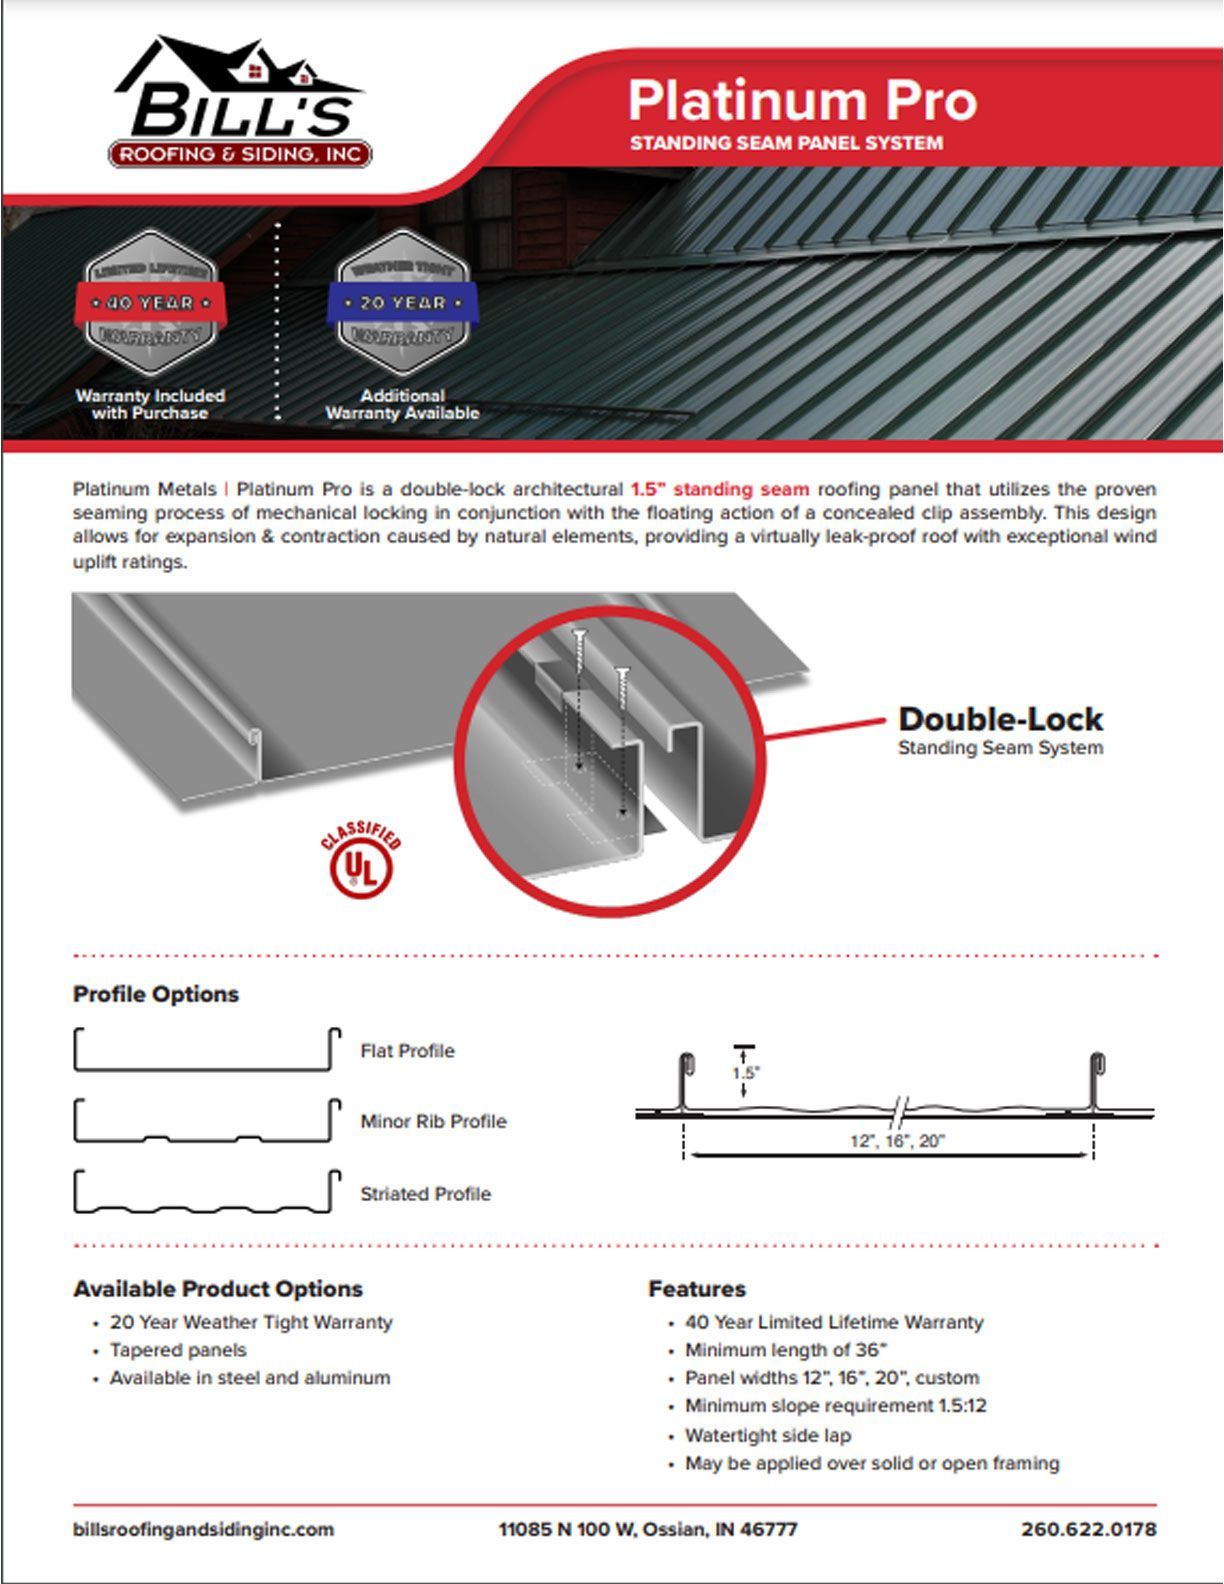 Metal Roofing Platinum Pro Sales Sheet